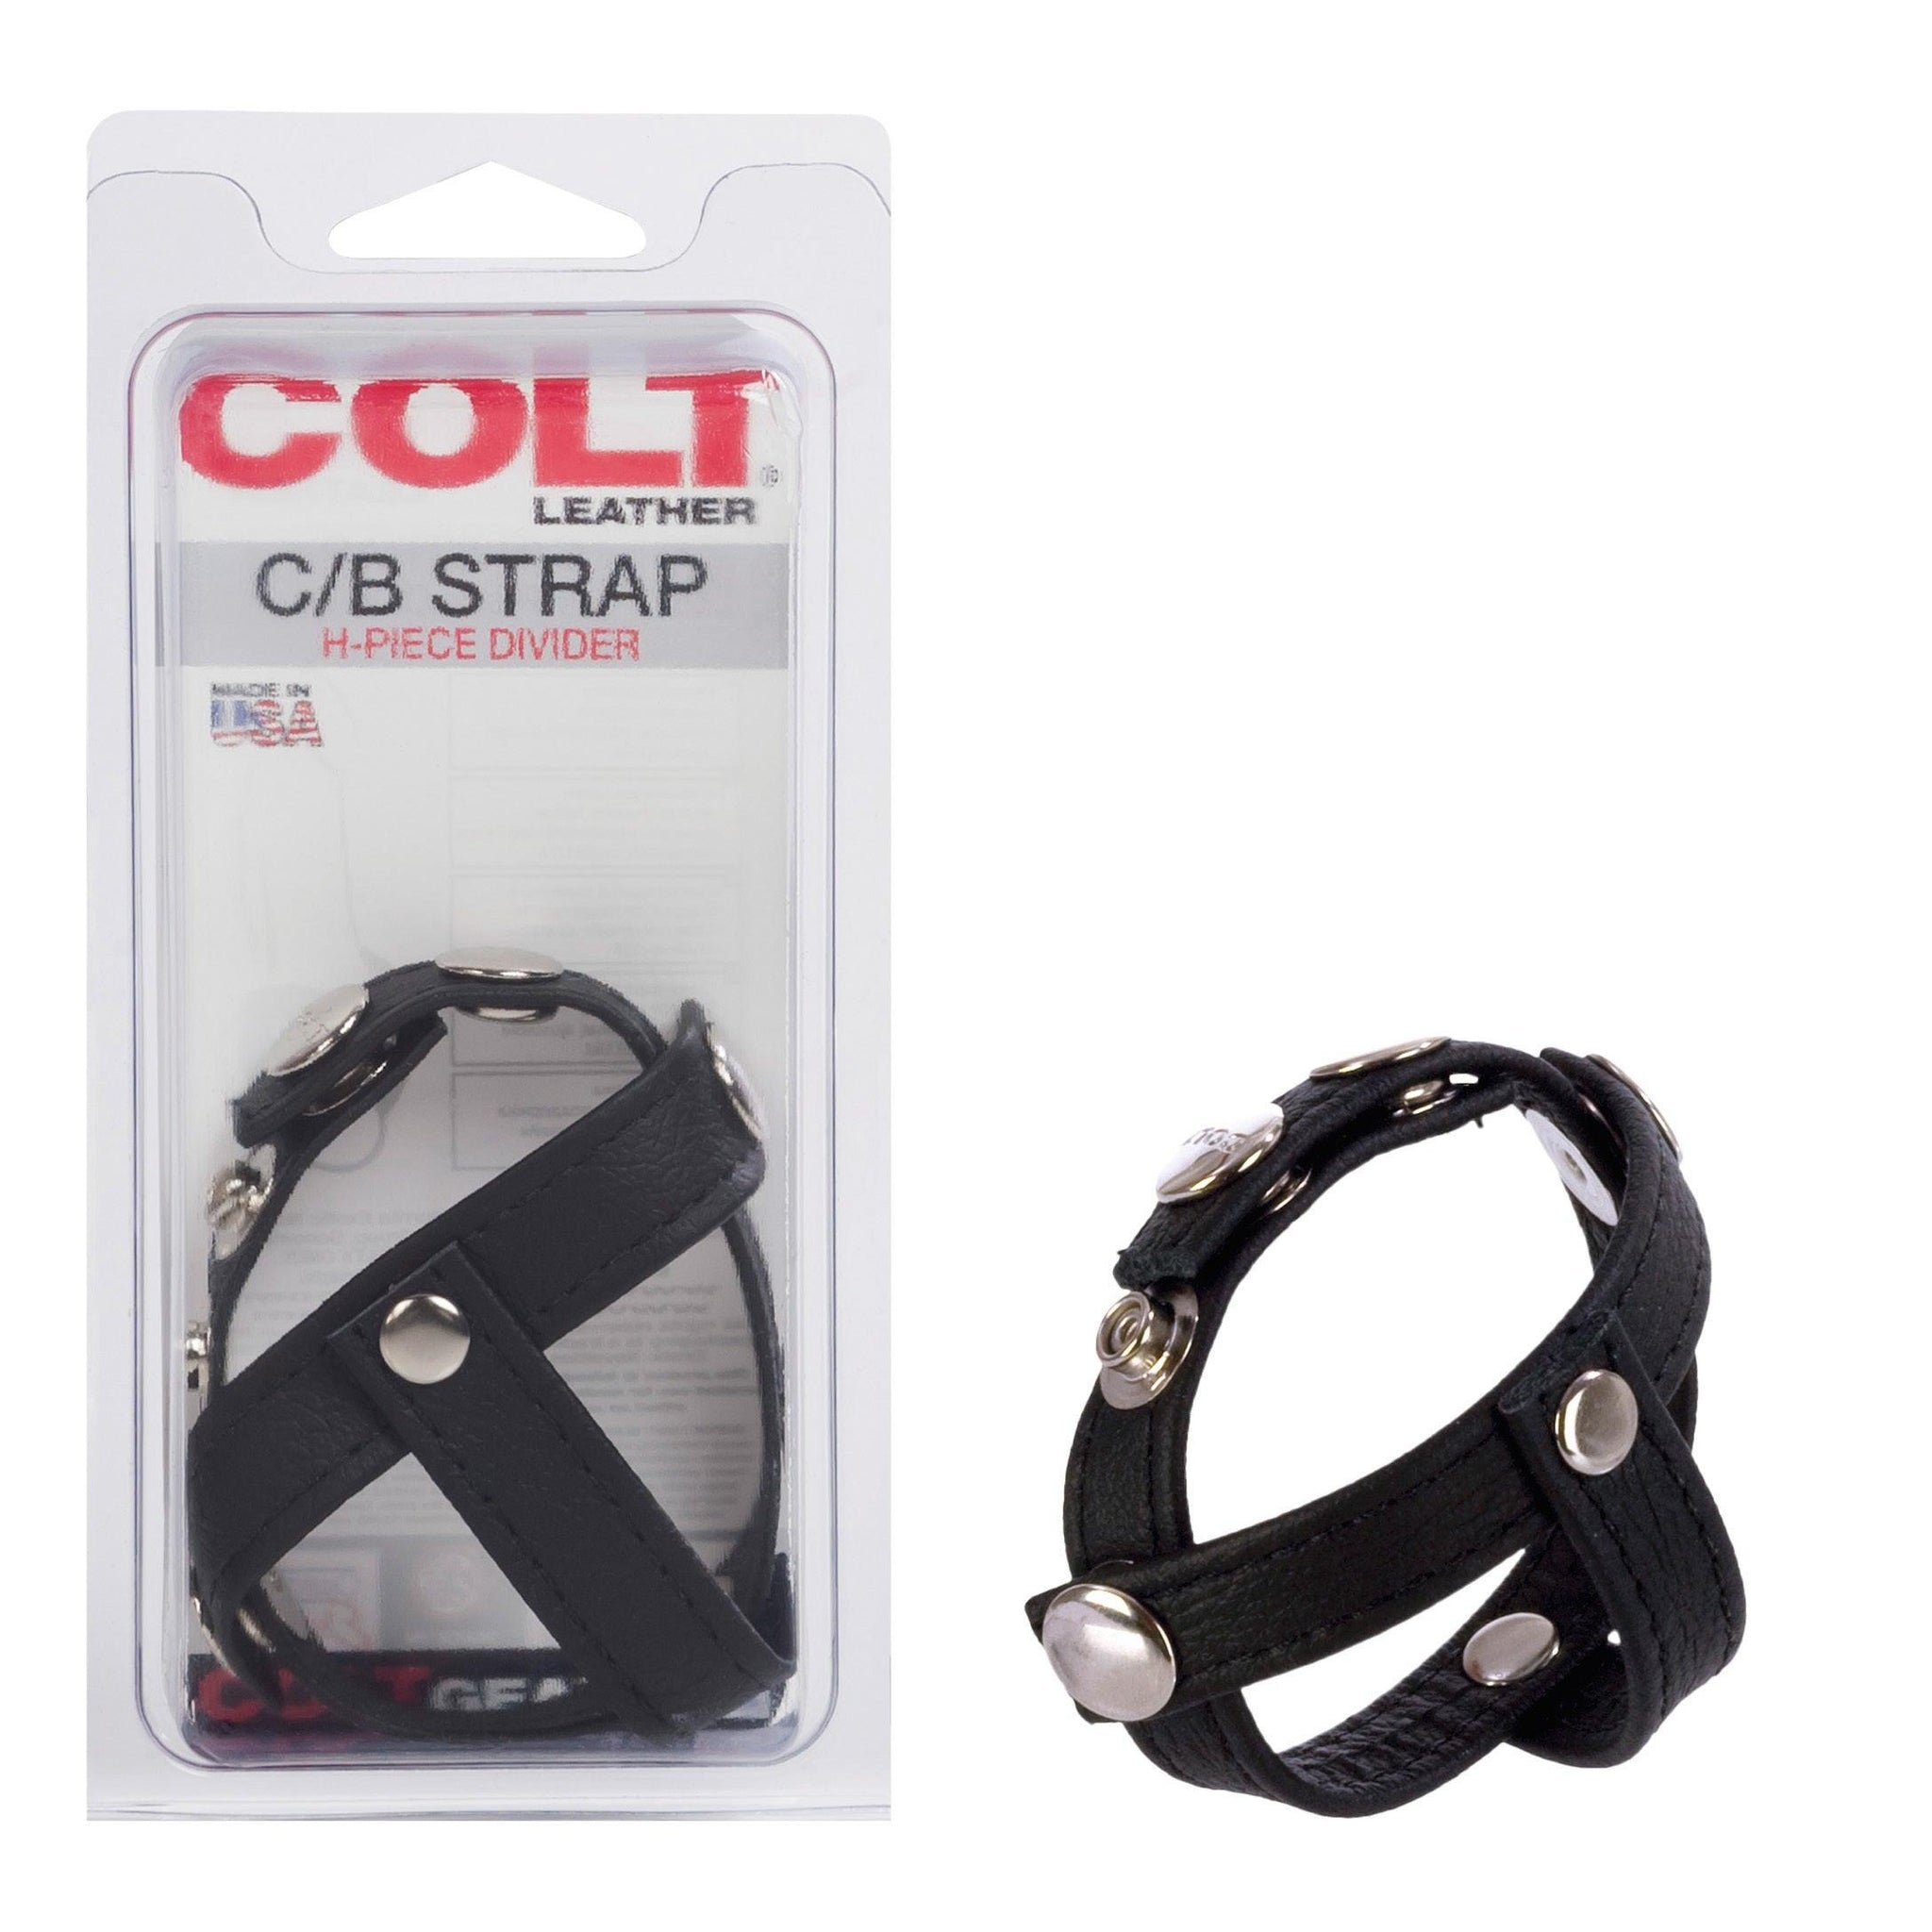 Colt Leather C/b Strap H-Piece Divider -